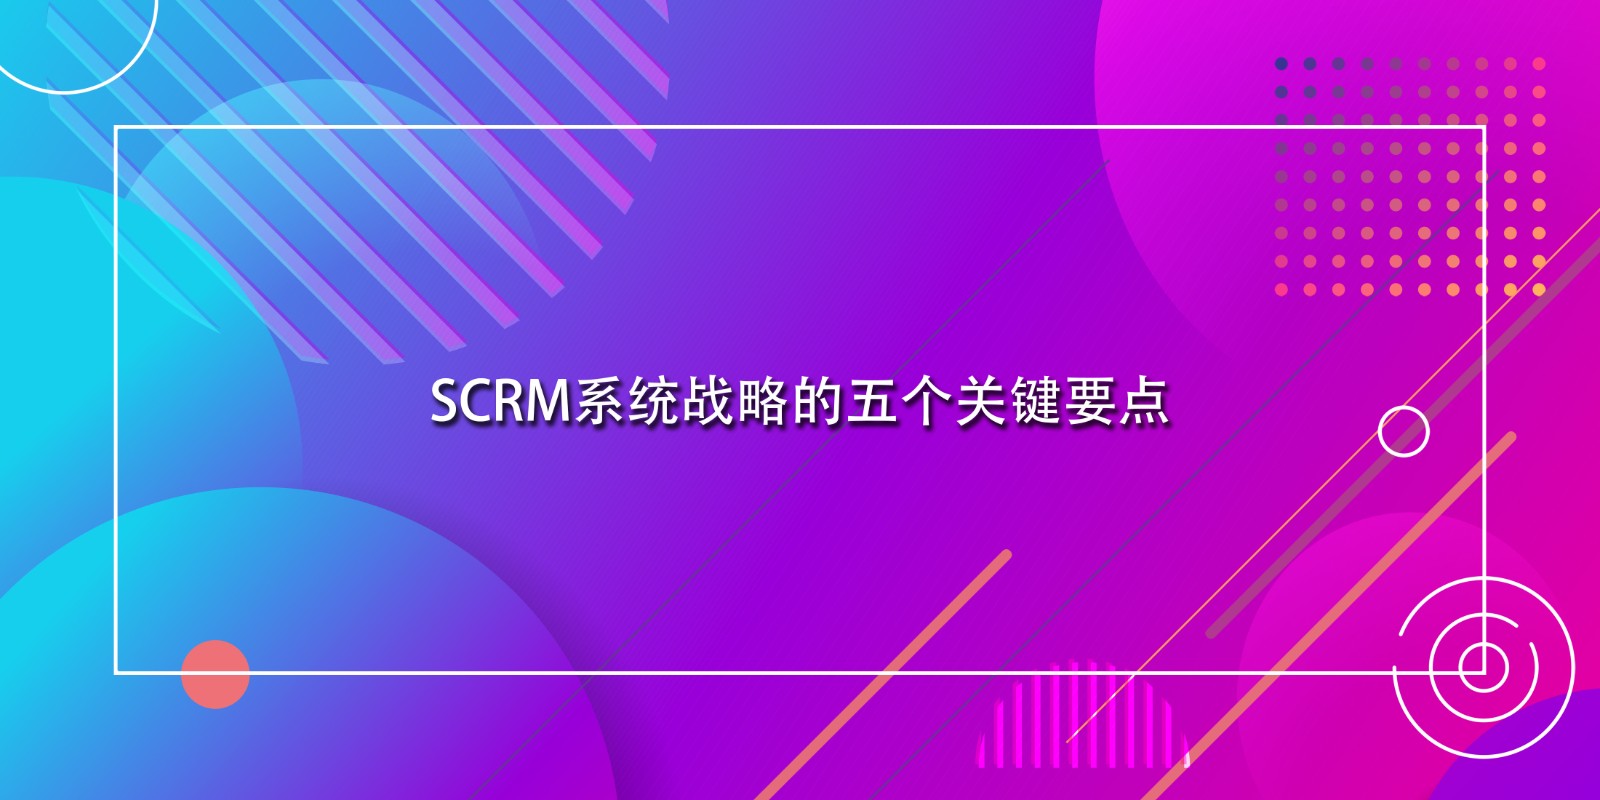 SCRM系统战略的五个关键要点